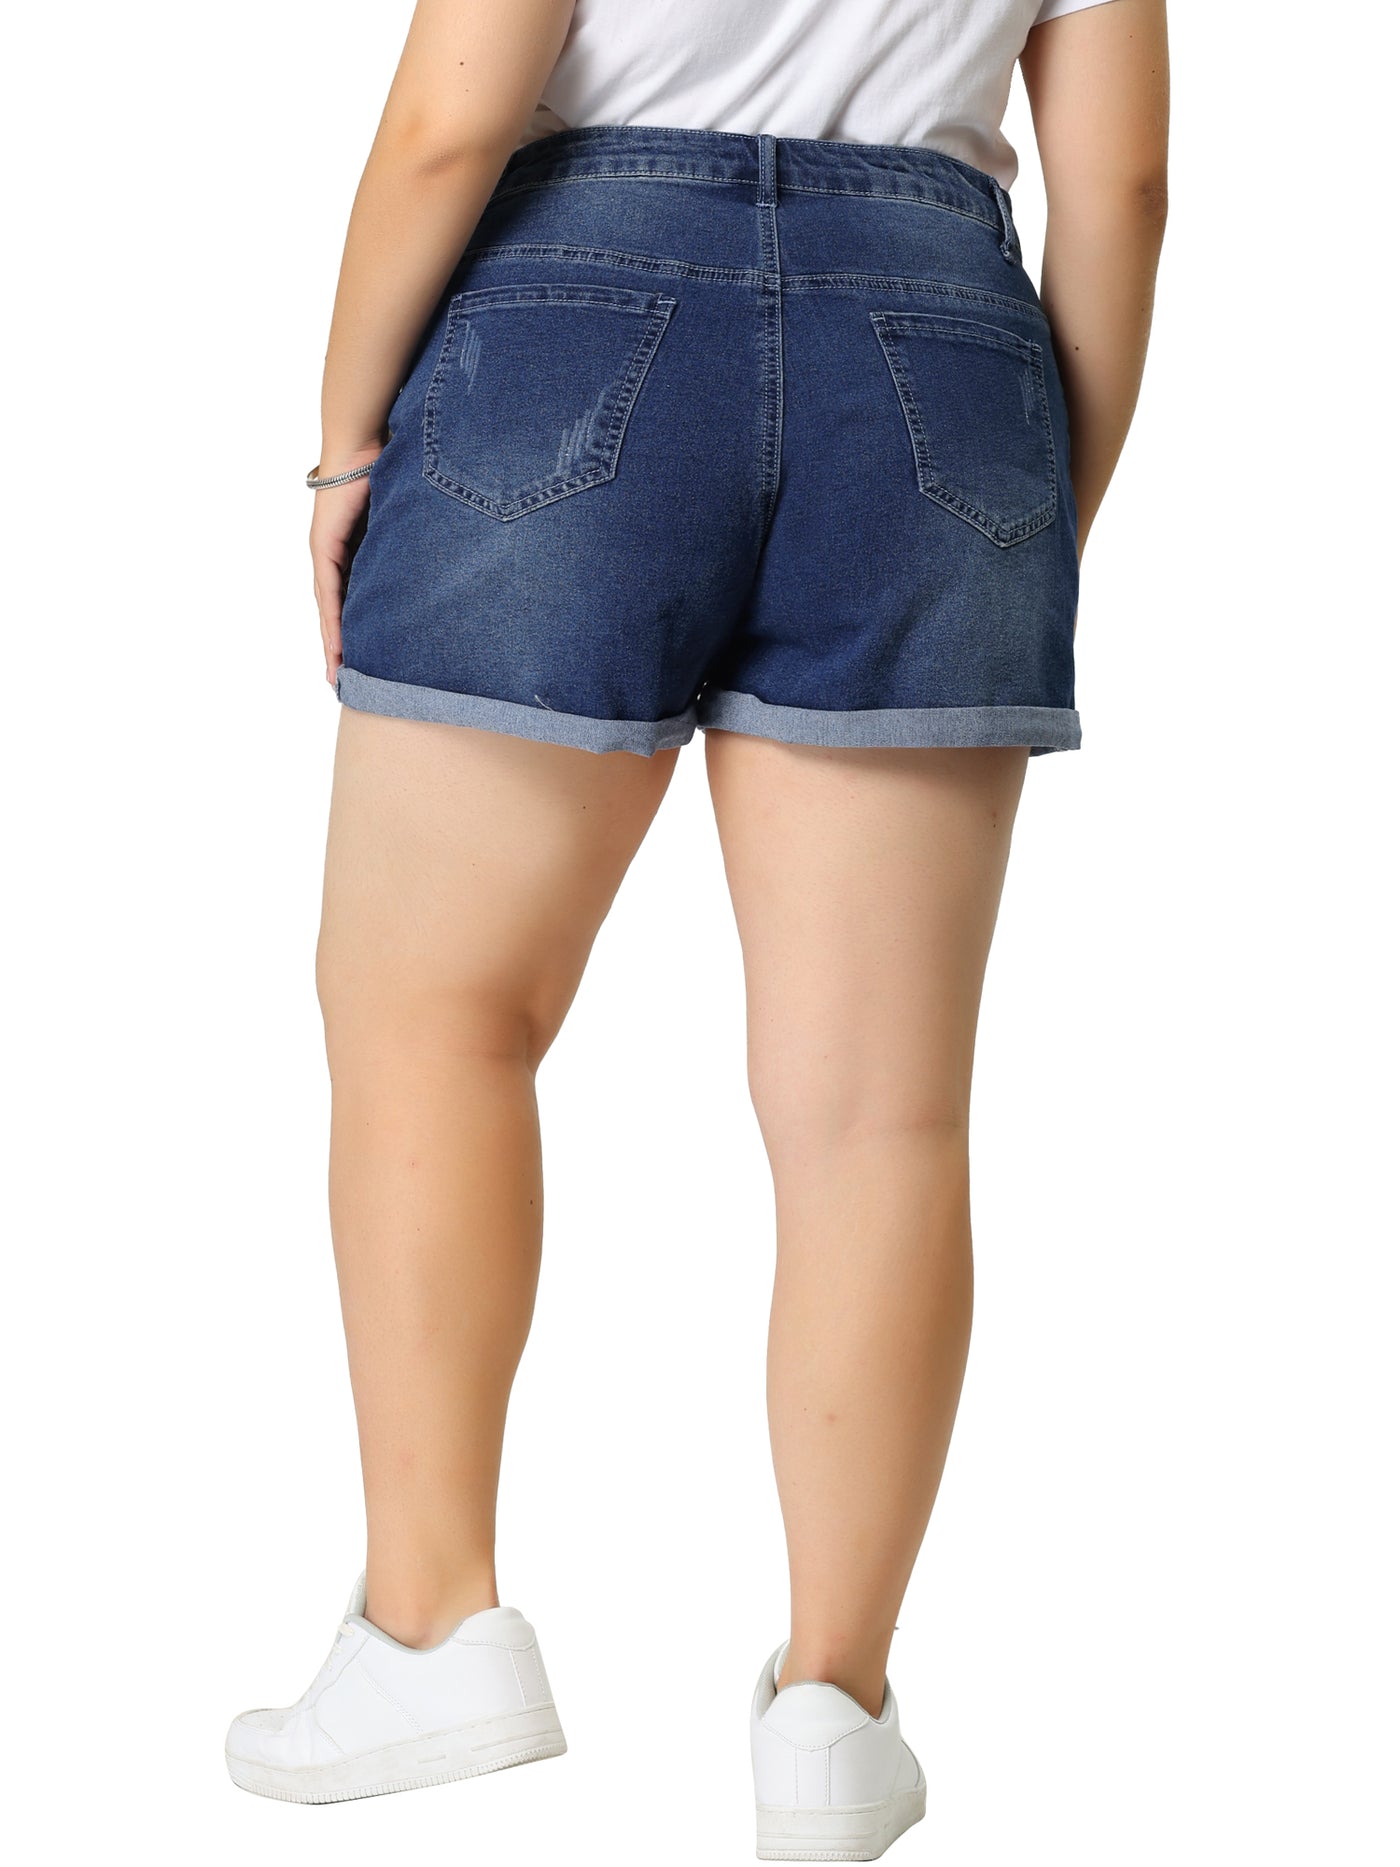 Bublédon Plus Size Shorts for Women Roll Hem Denim Jeans Short Pants